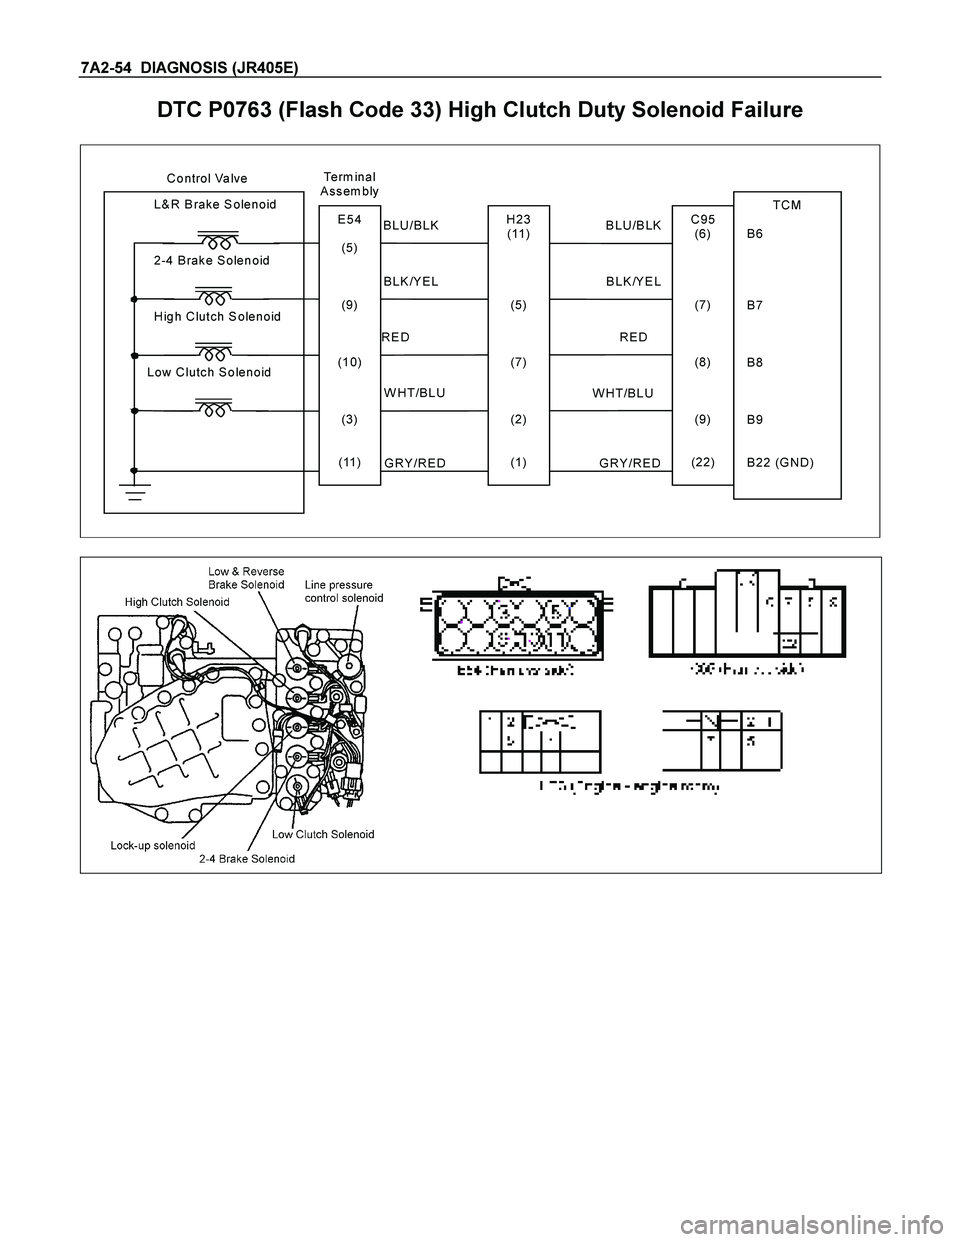 ISUZU TF SERIES 2004  Workshop Manual 7A2-54  DIAGNOSIS (JR405E)  
DTC P0763 (Flash Code 33) High Clutch Duty Solenoid Failure 
  
 
 
       C ontrol Valve
               
                                        TCM 
B6 
B7 
B8 
B9 
B22 